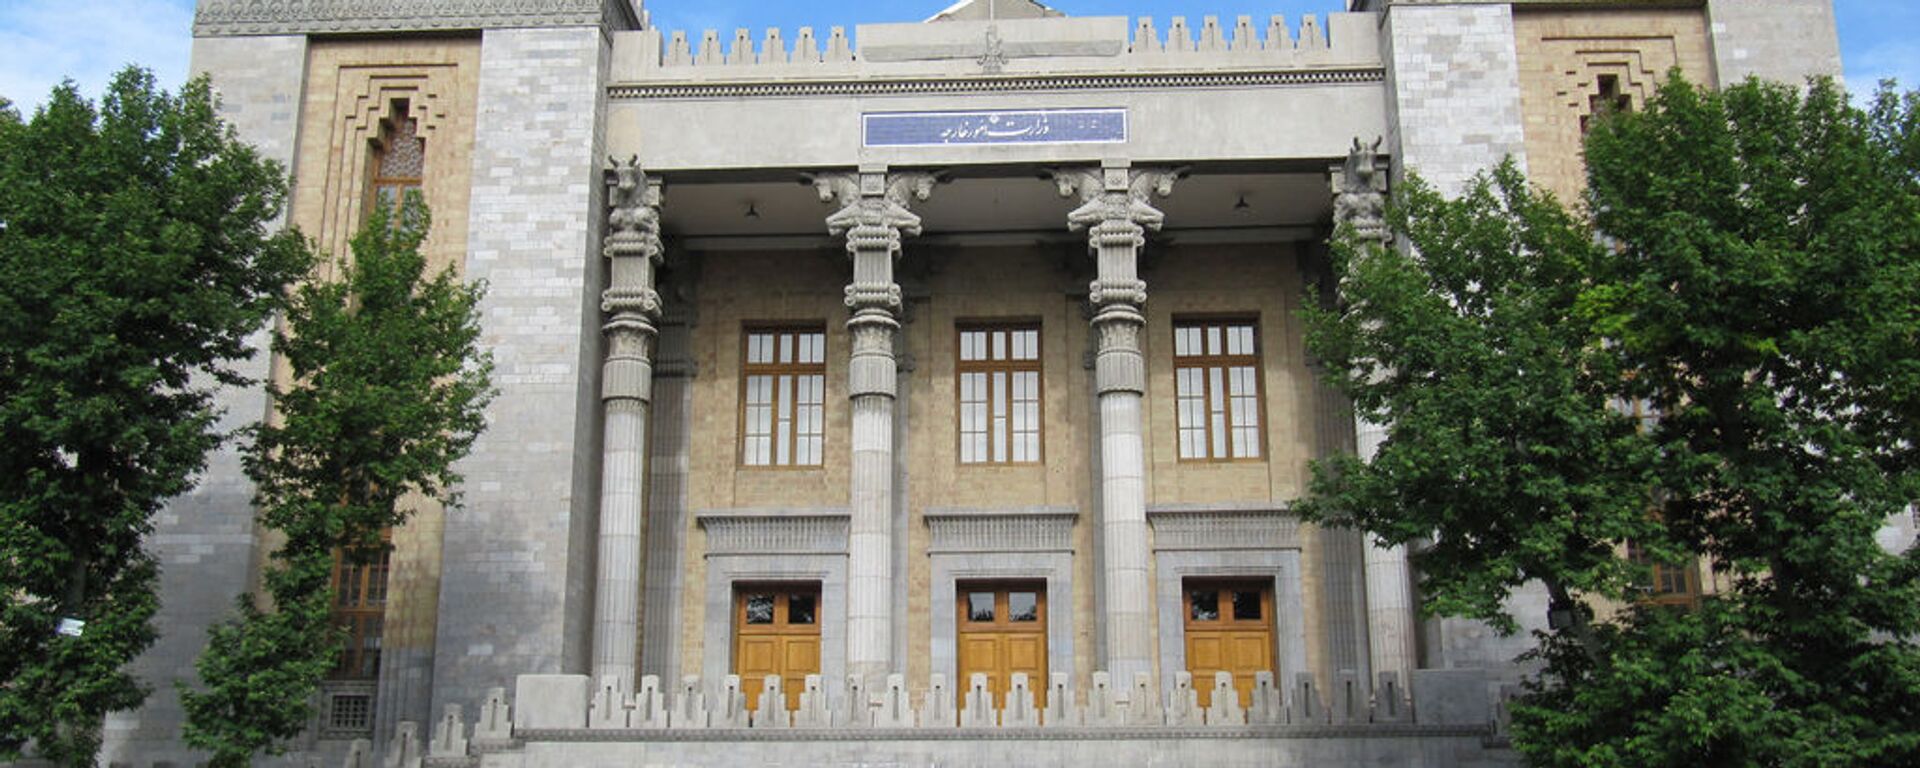 Здание МИД Исламской Республики Иран - Sputnik Արմենիա, 1920, 25.02.2021